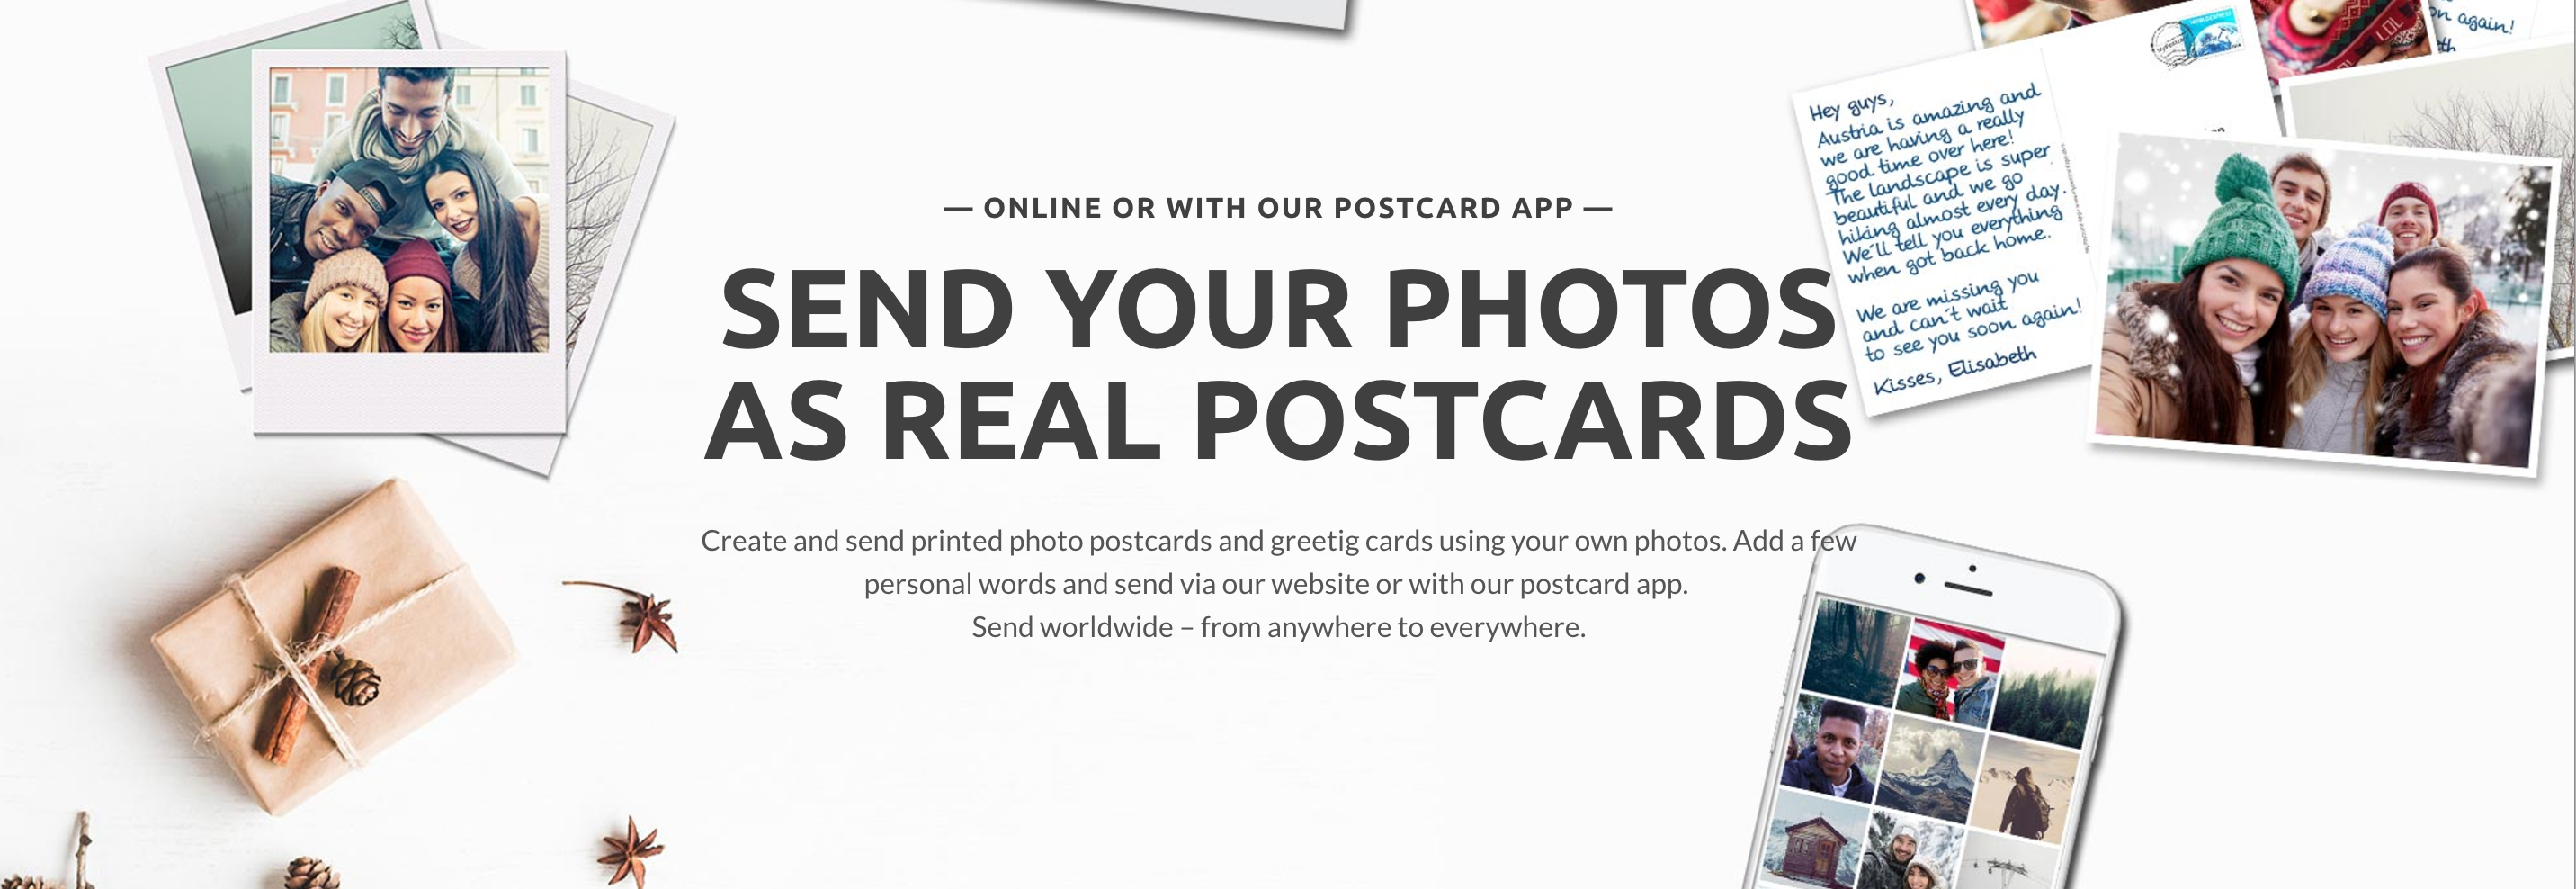 MyPostcard - Postcard App Review